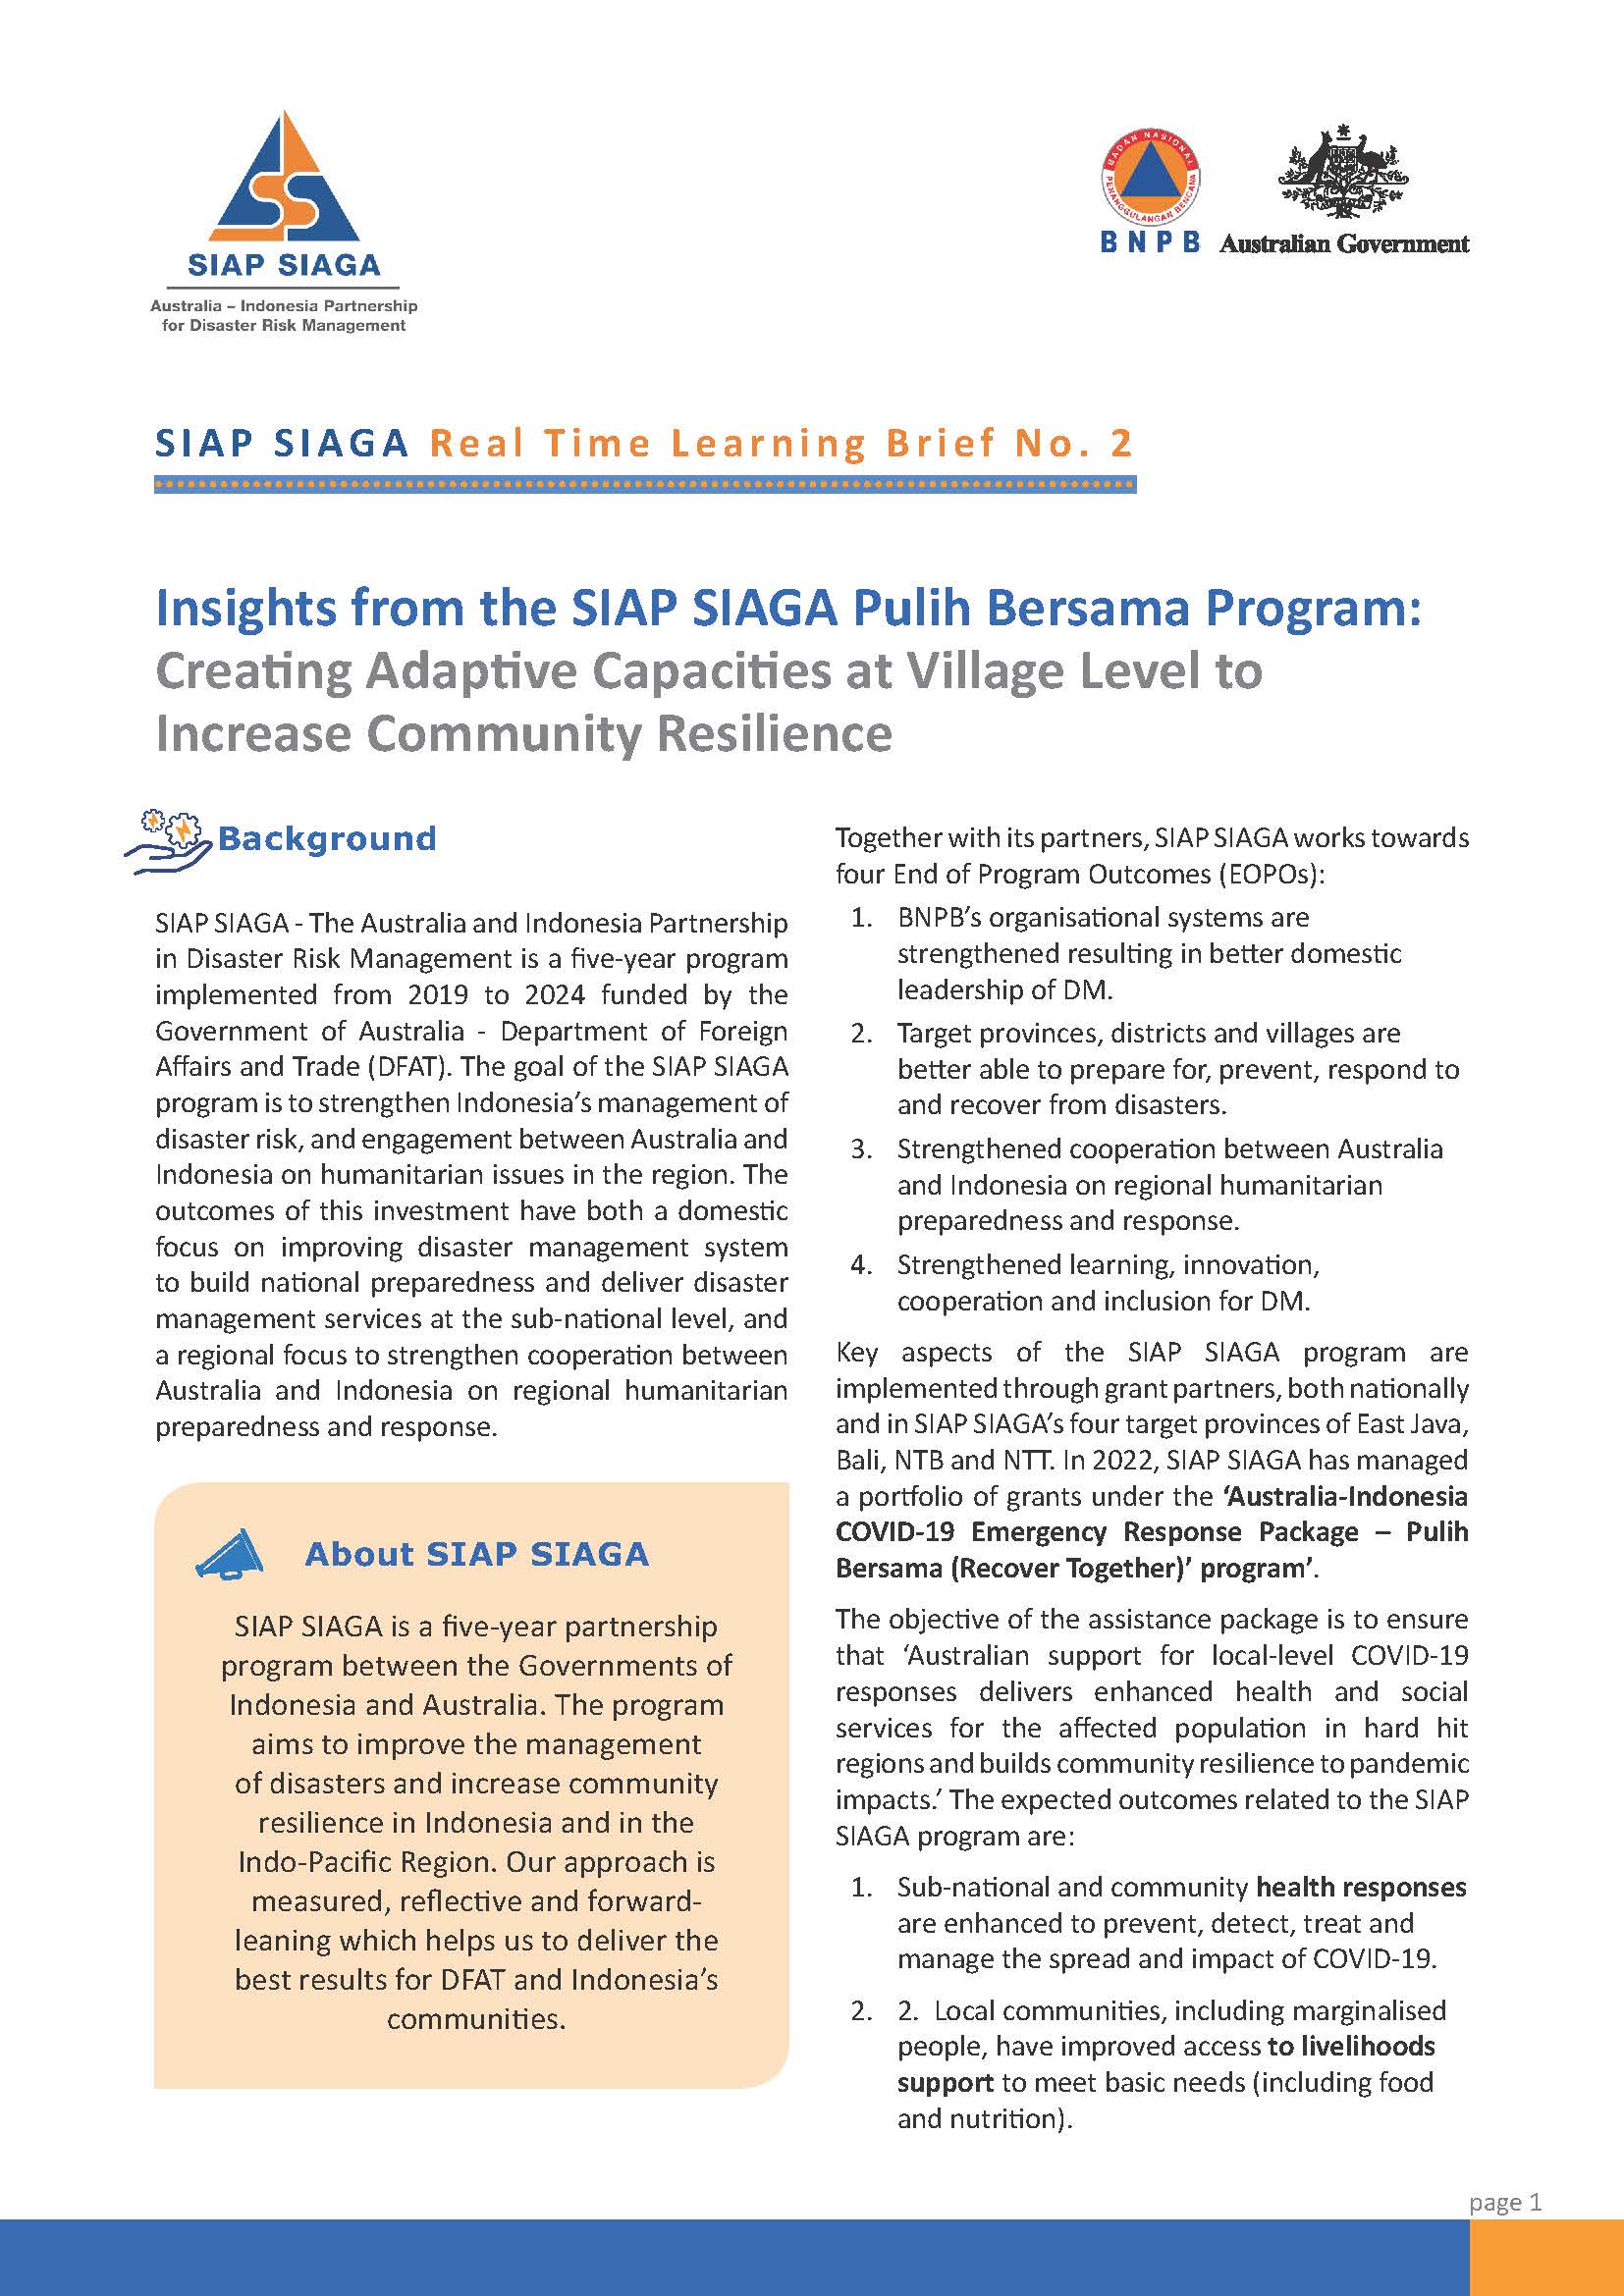 SIAP SIAGA Real Time Learning Brief No 2 – Creating Adaptive Capacities at Village Level – Aug 2022